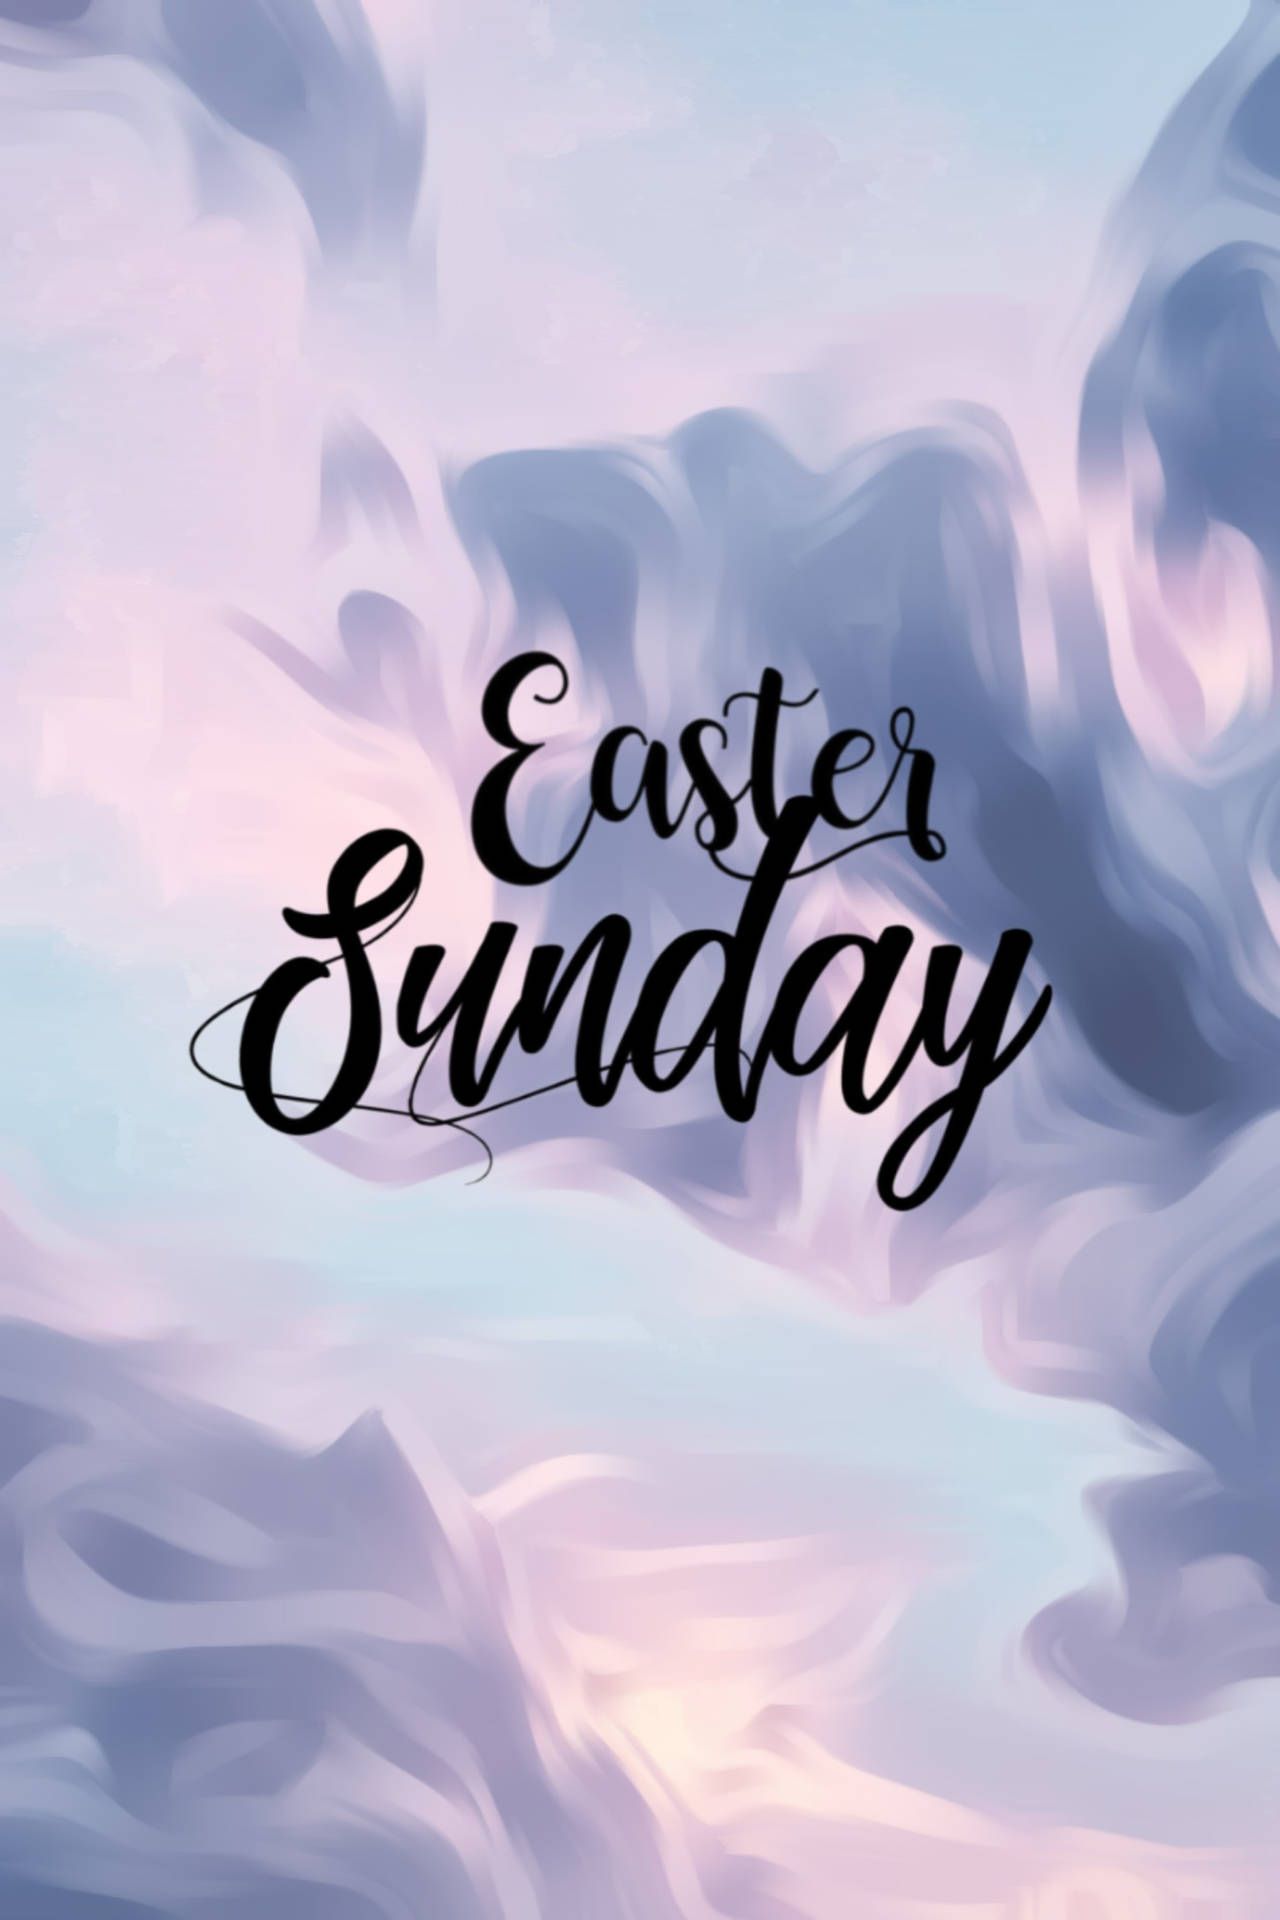 Download Aesthetic Easter Wallpaper